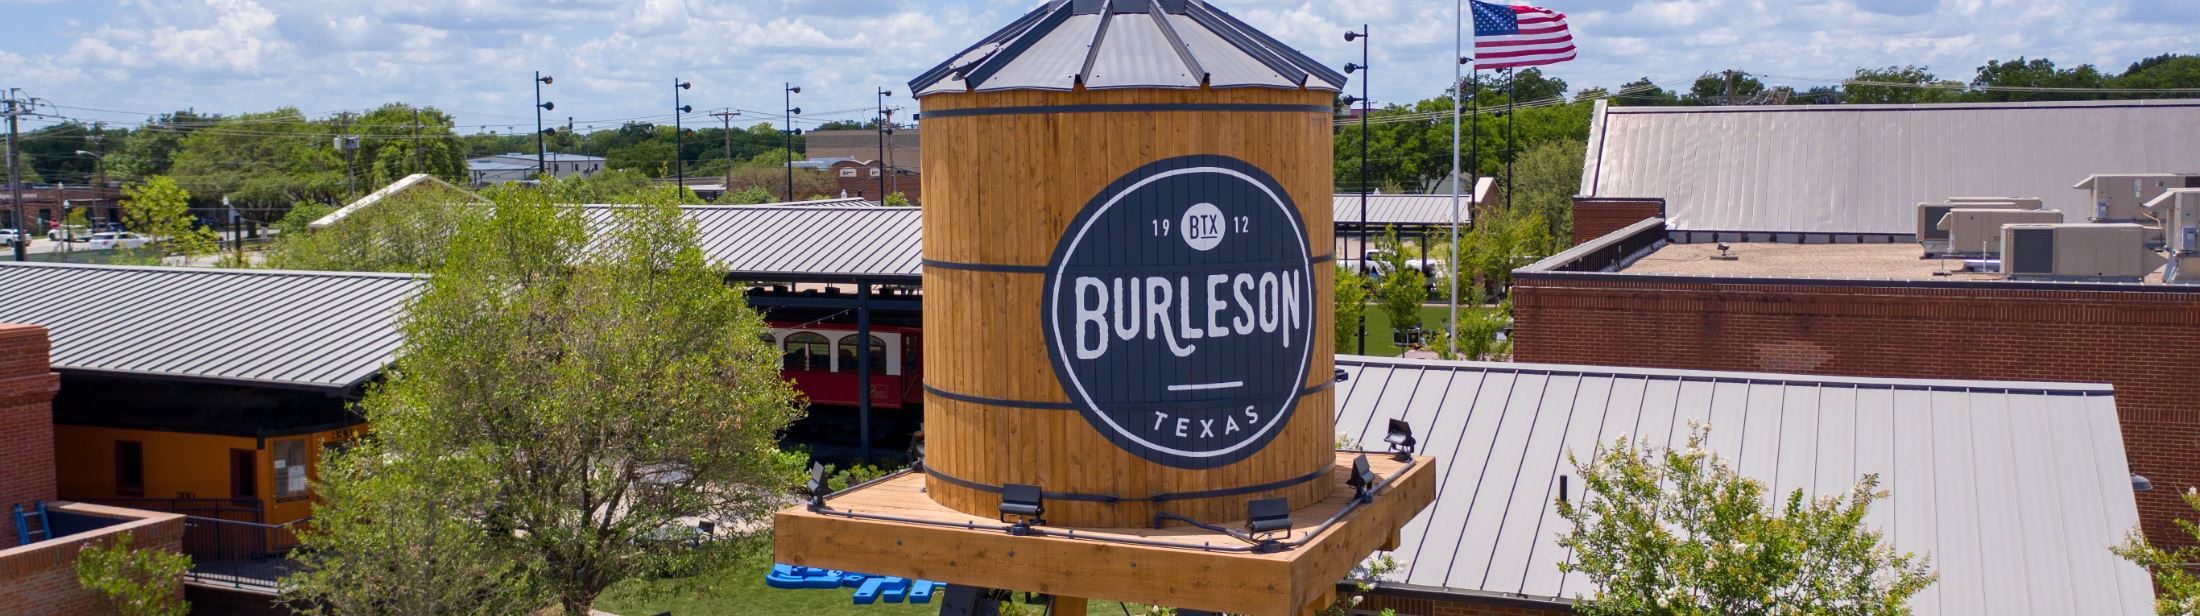 Burleson Texas